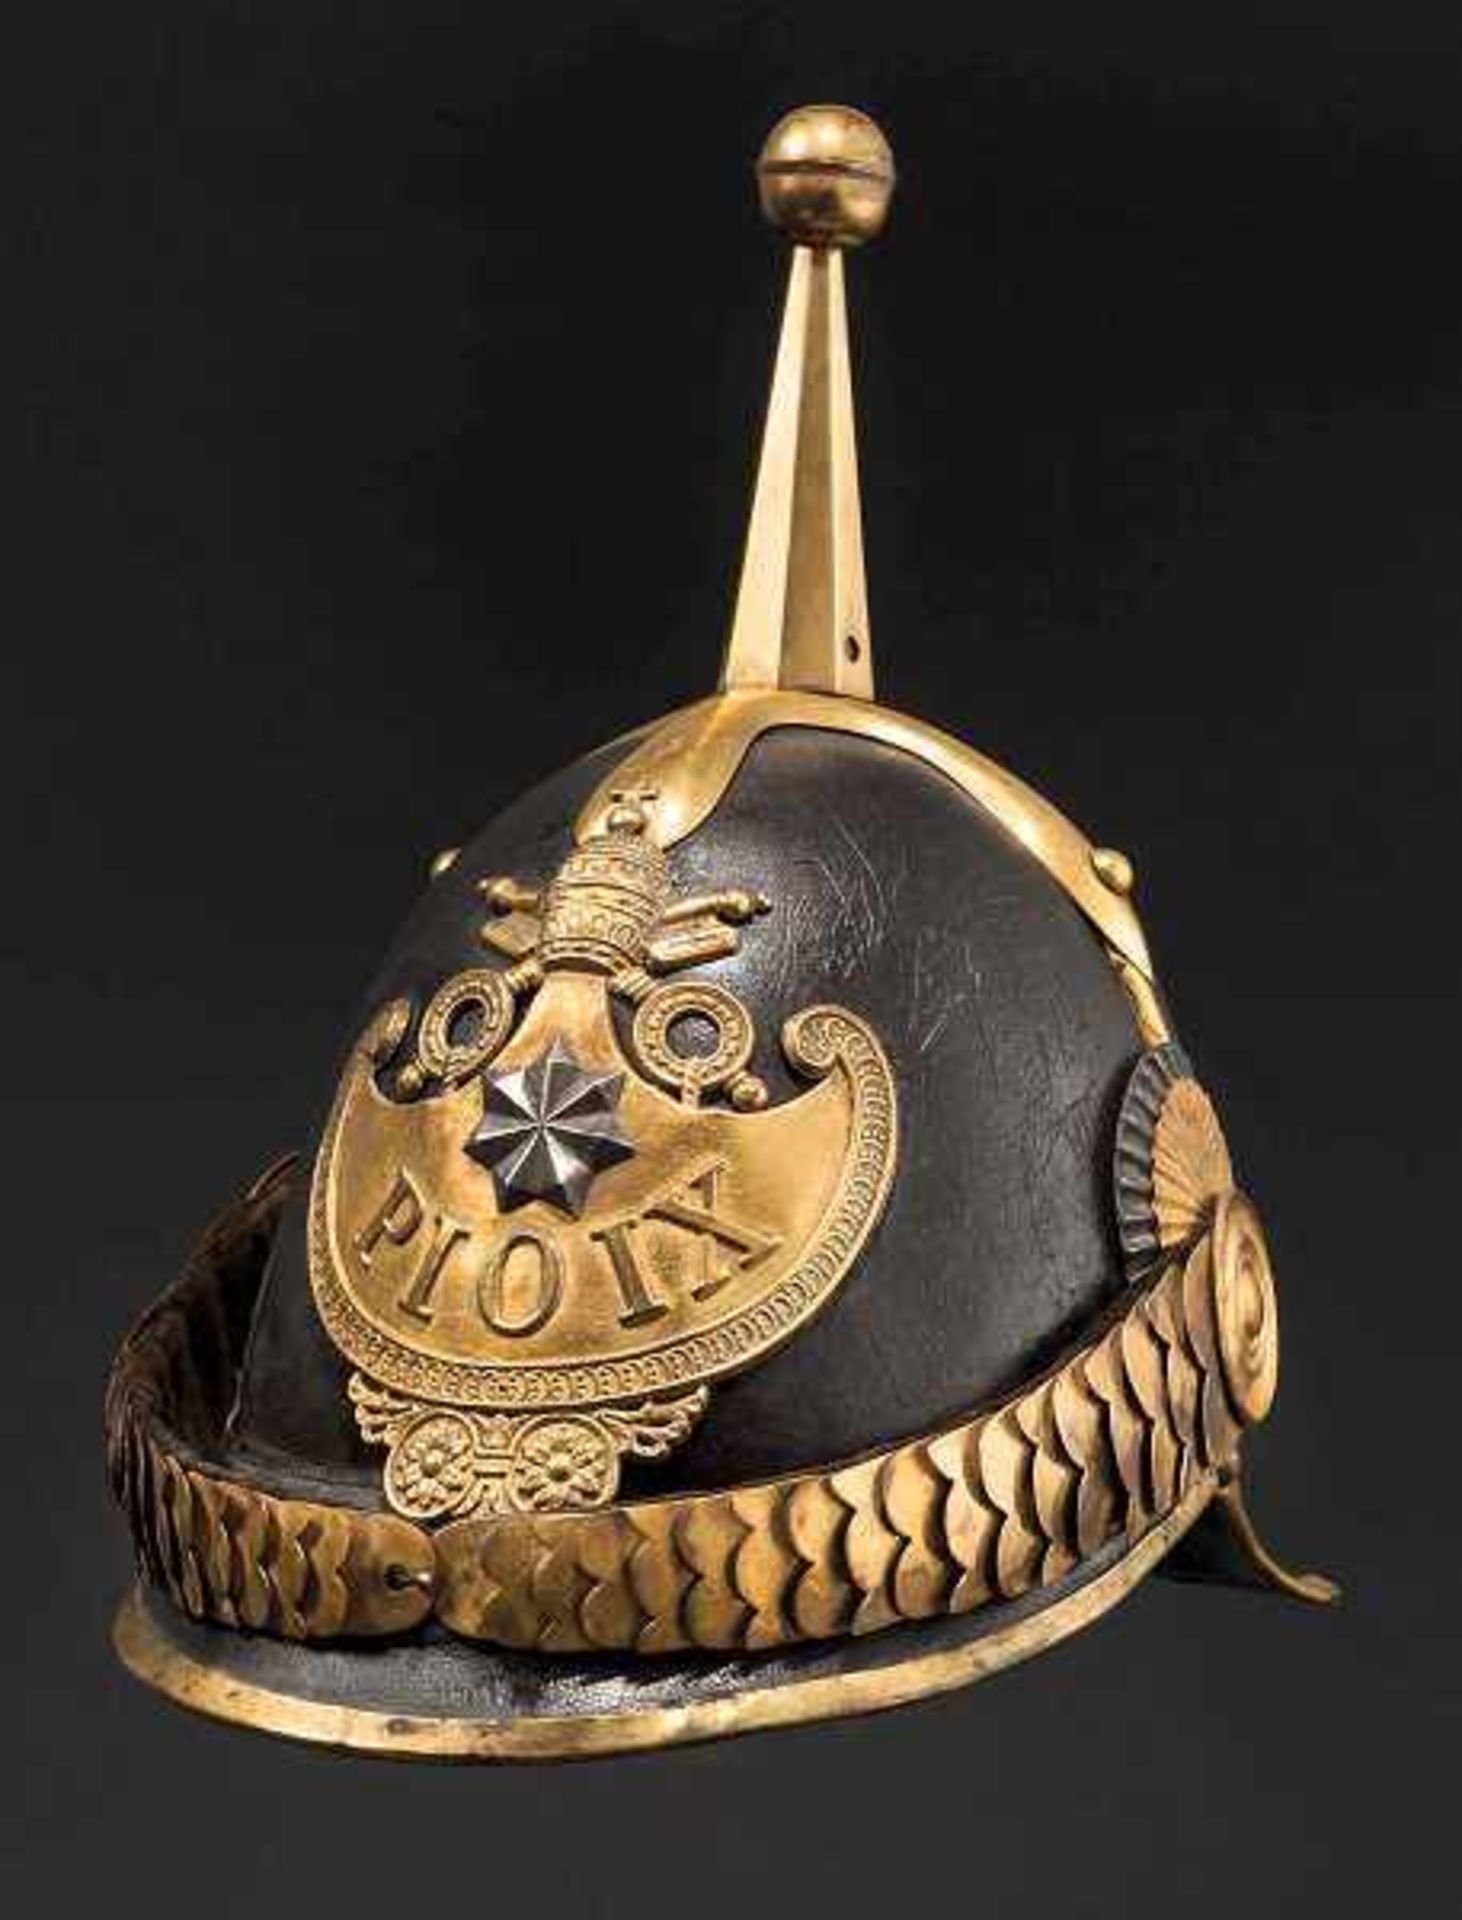 Helm für einen Offizier der "Guardia Civica Pontificia" aus dem Pontifikat Pius IX. (1846 - 1878)